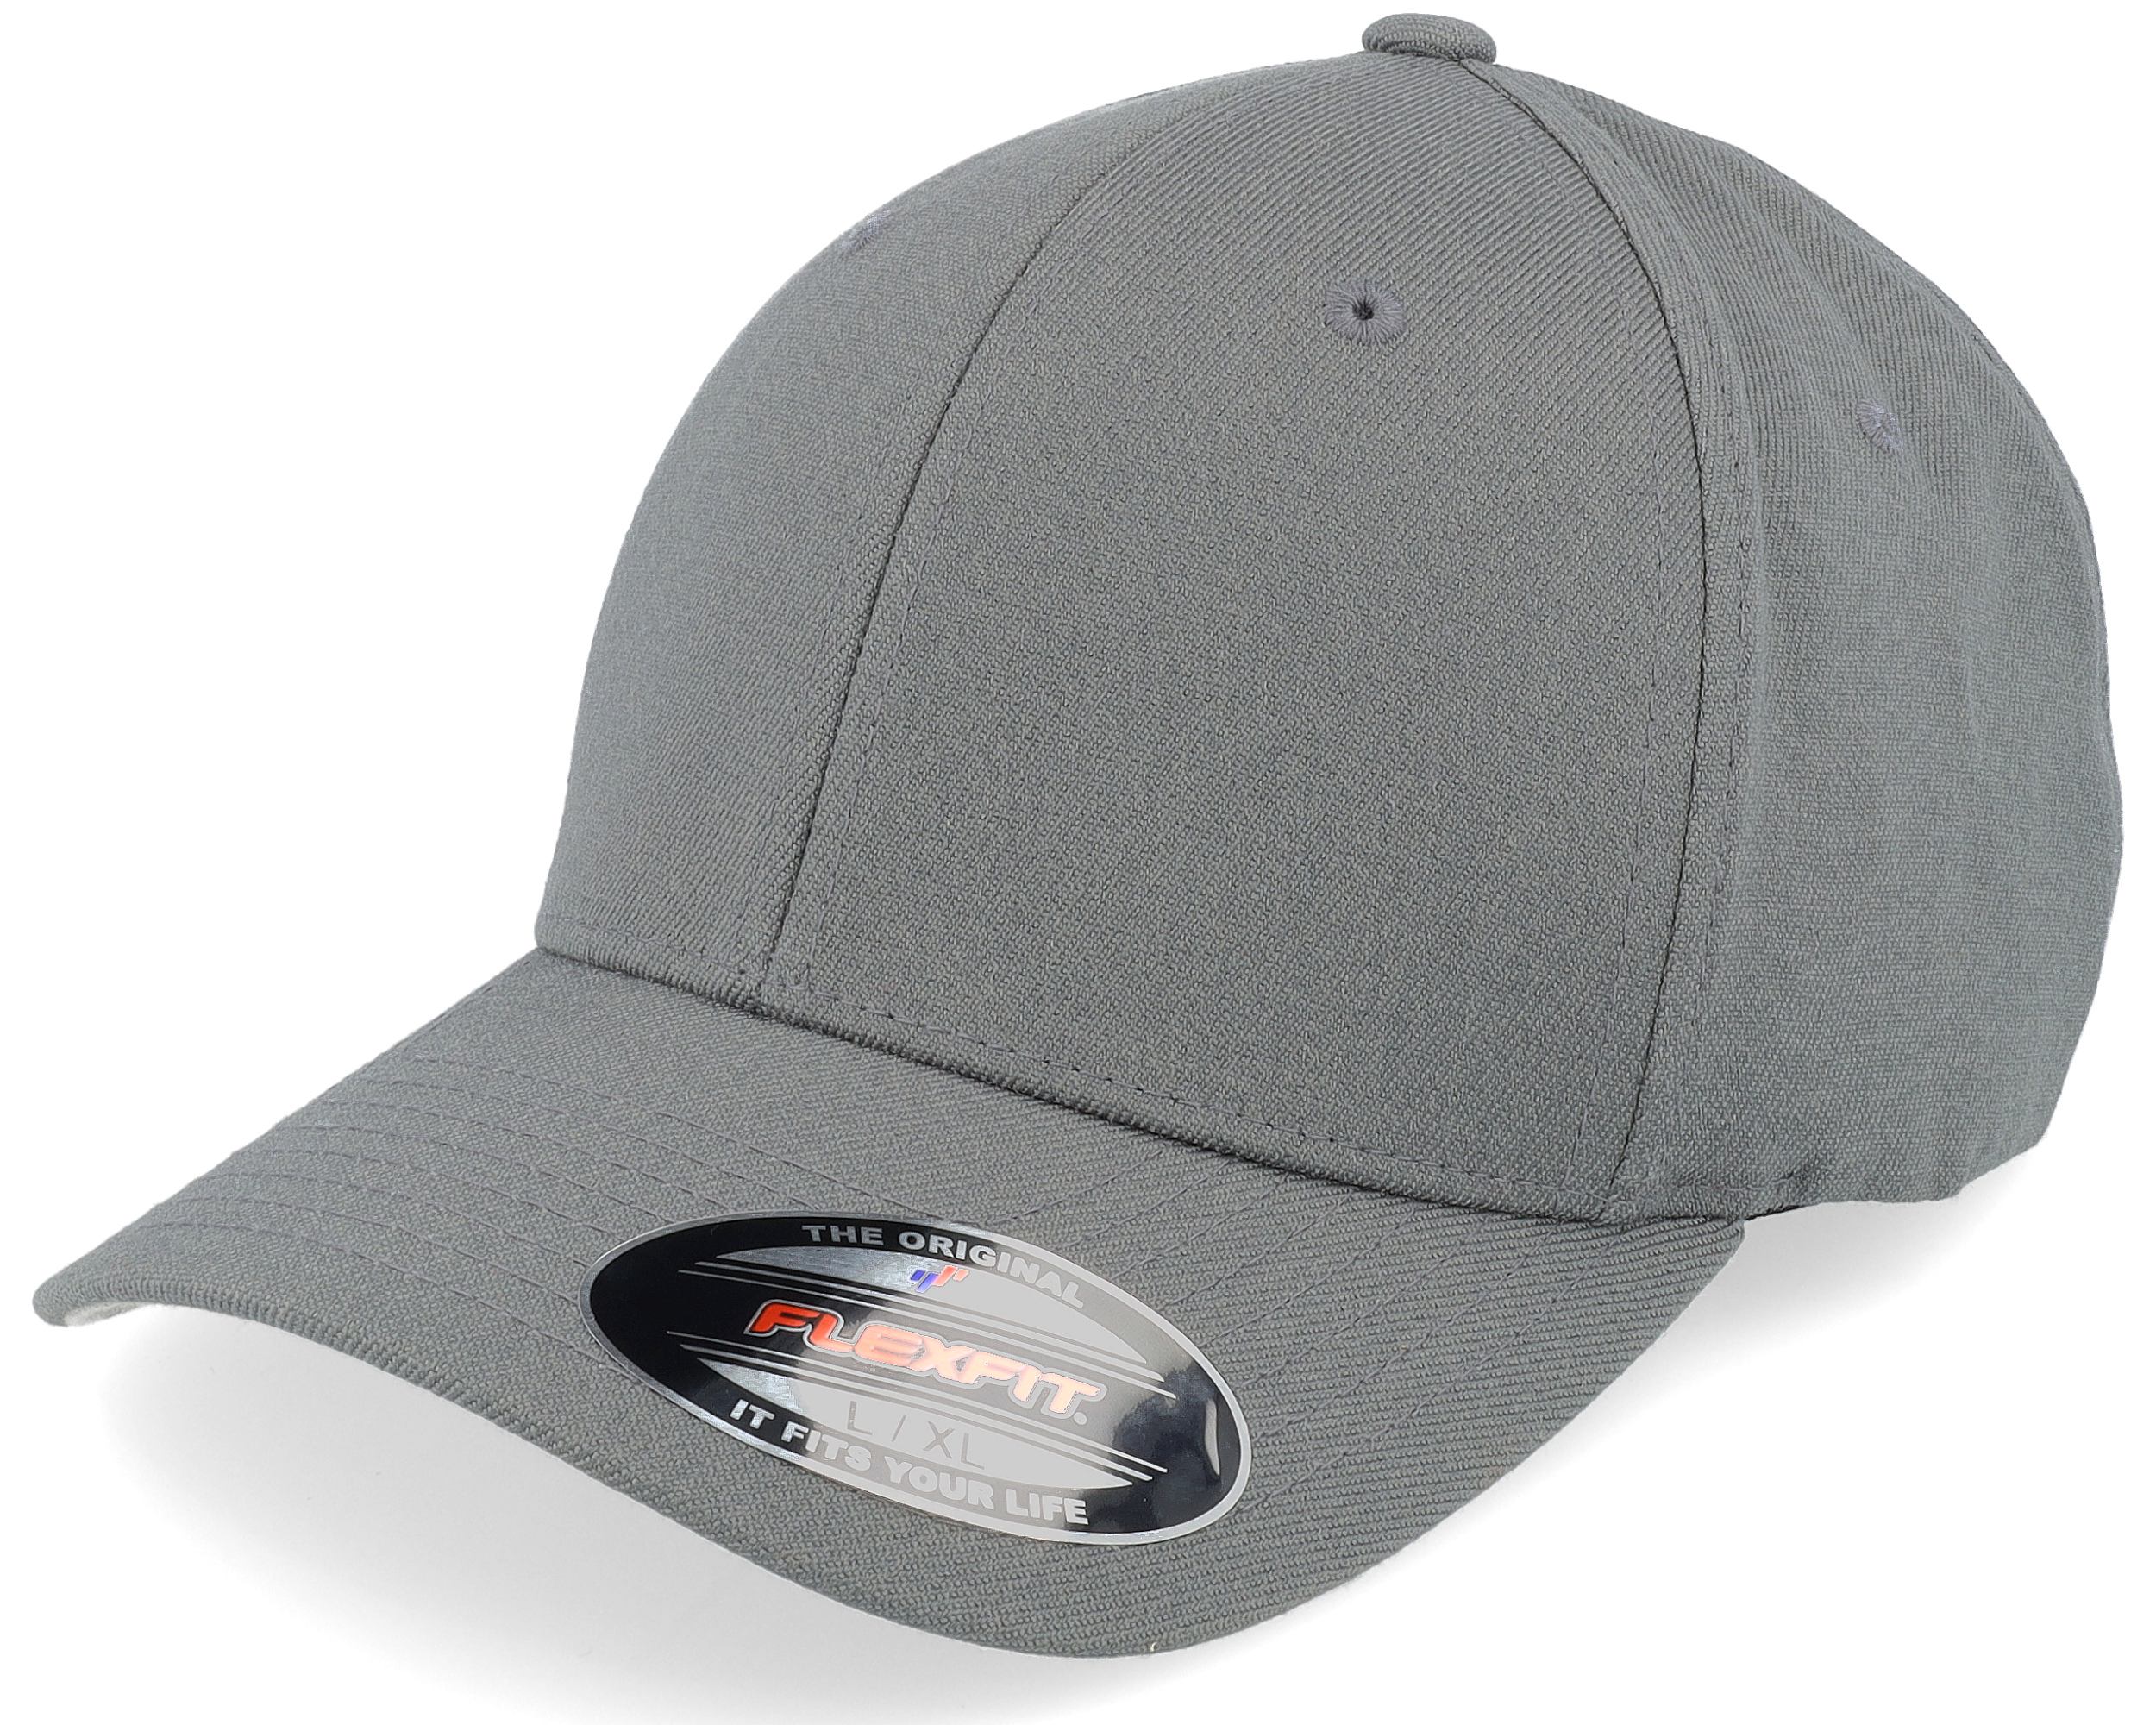 Wool Blend - Grey Flexfit Flexfit cap